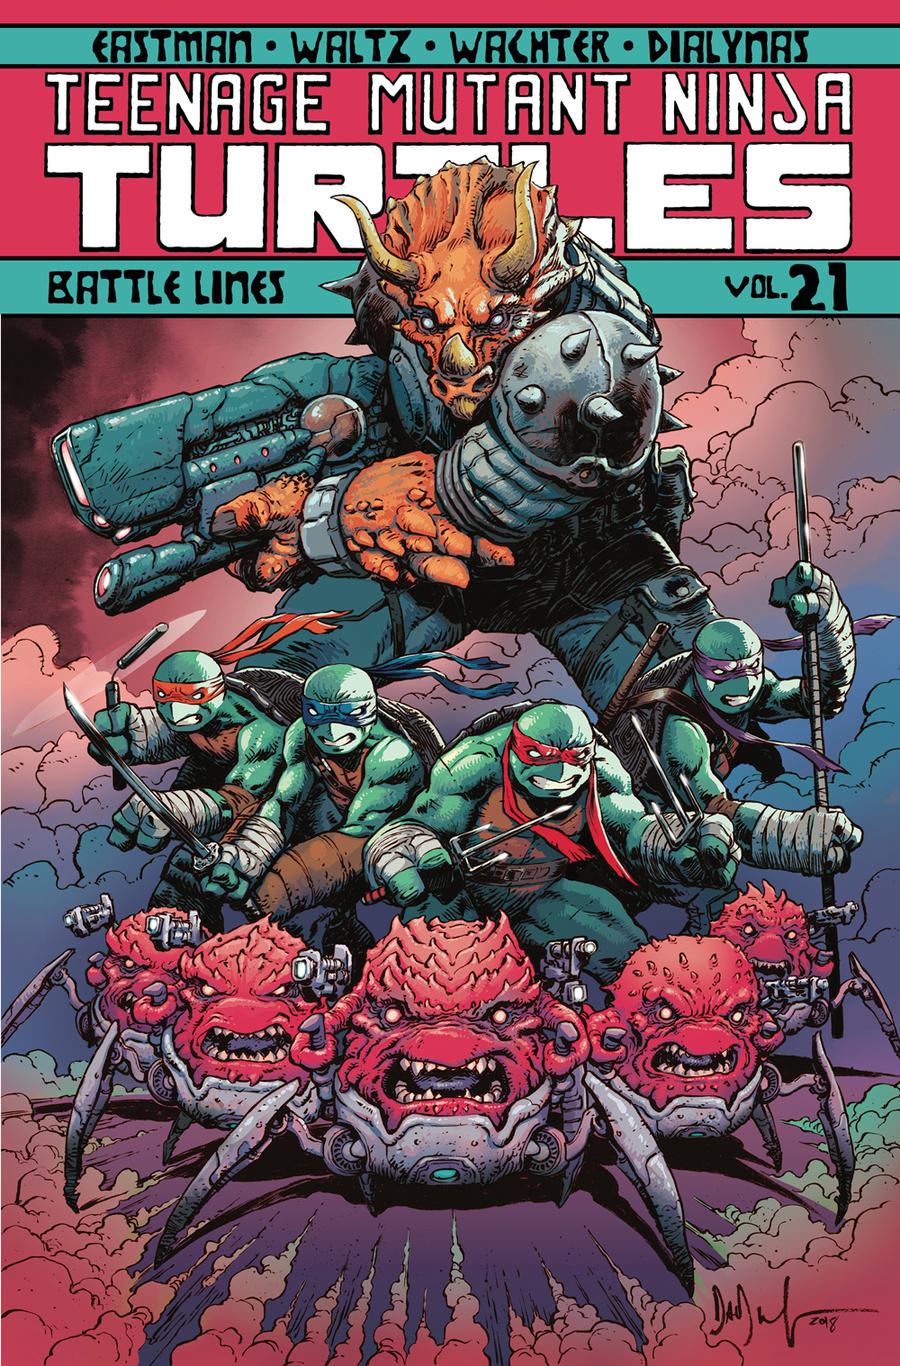 Teenage Mutant Ninja Turtles Ongoing Vol 21 Battle Lines TP